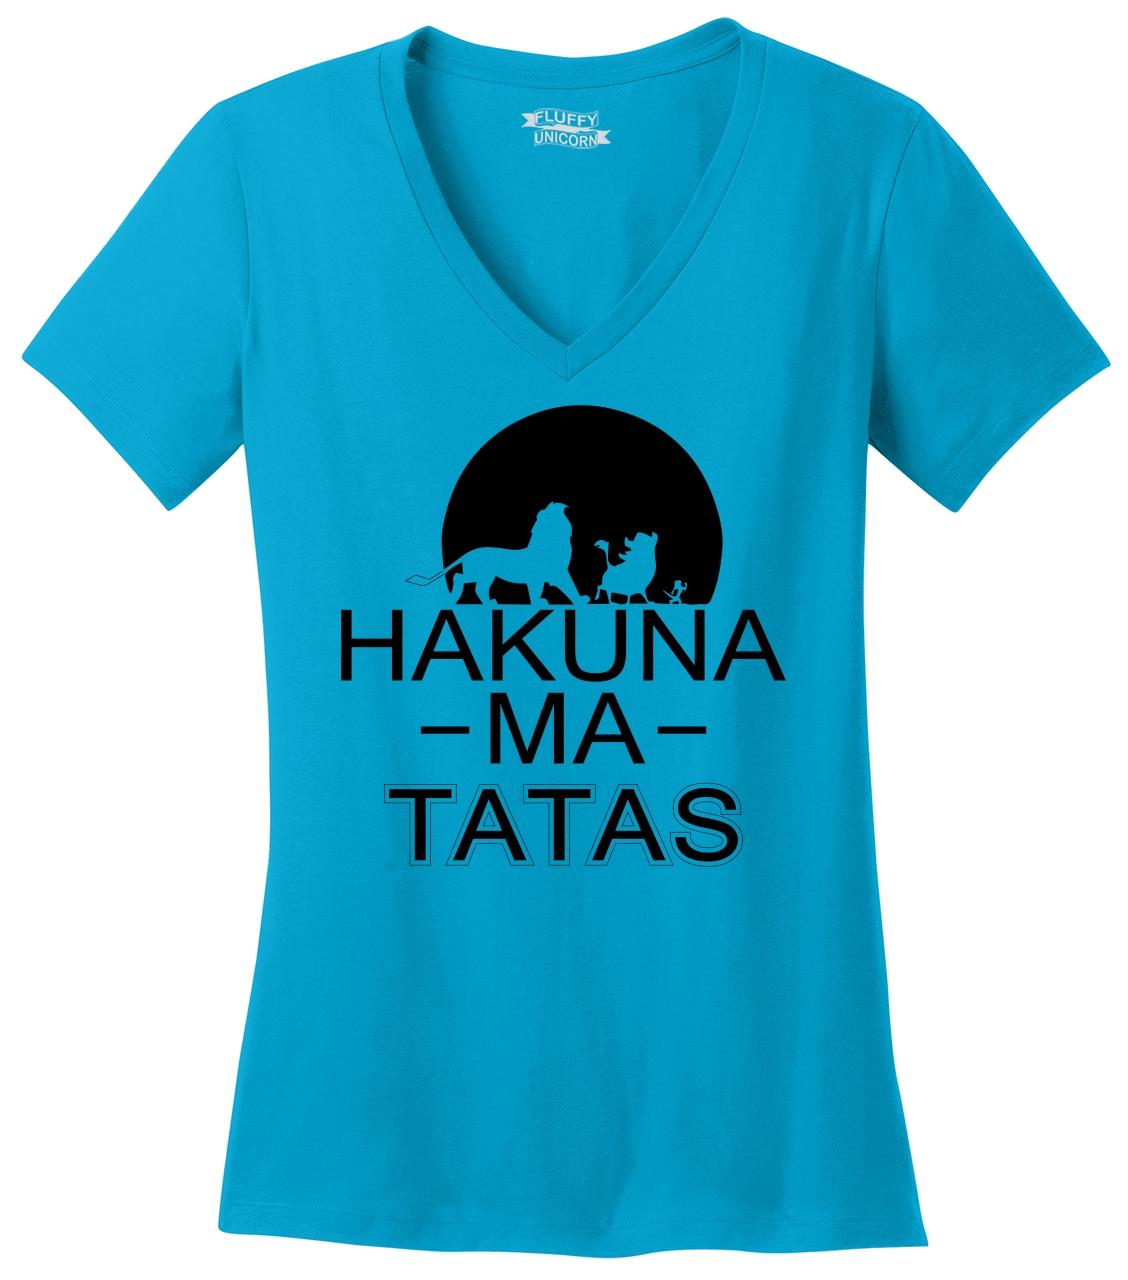 T-shirt Vest T-shirt love for life & family HAKUNA MATATAS,charity Race cancer